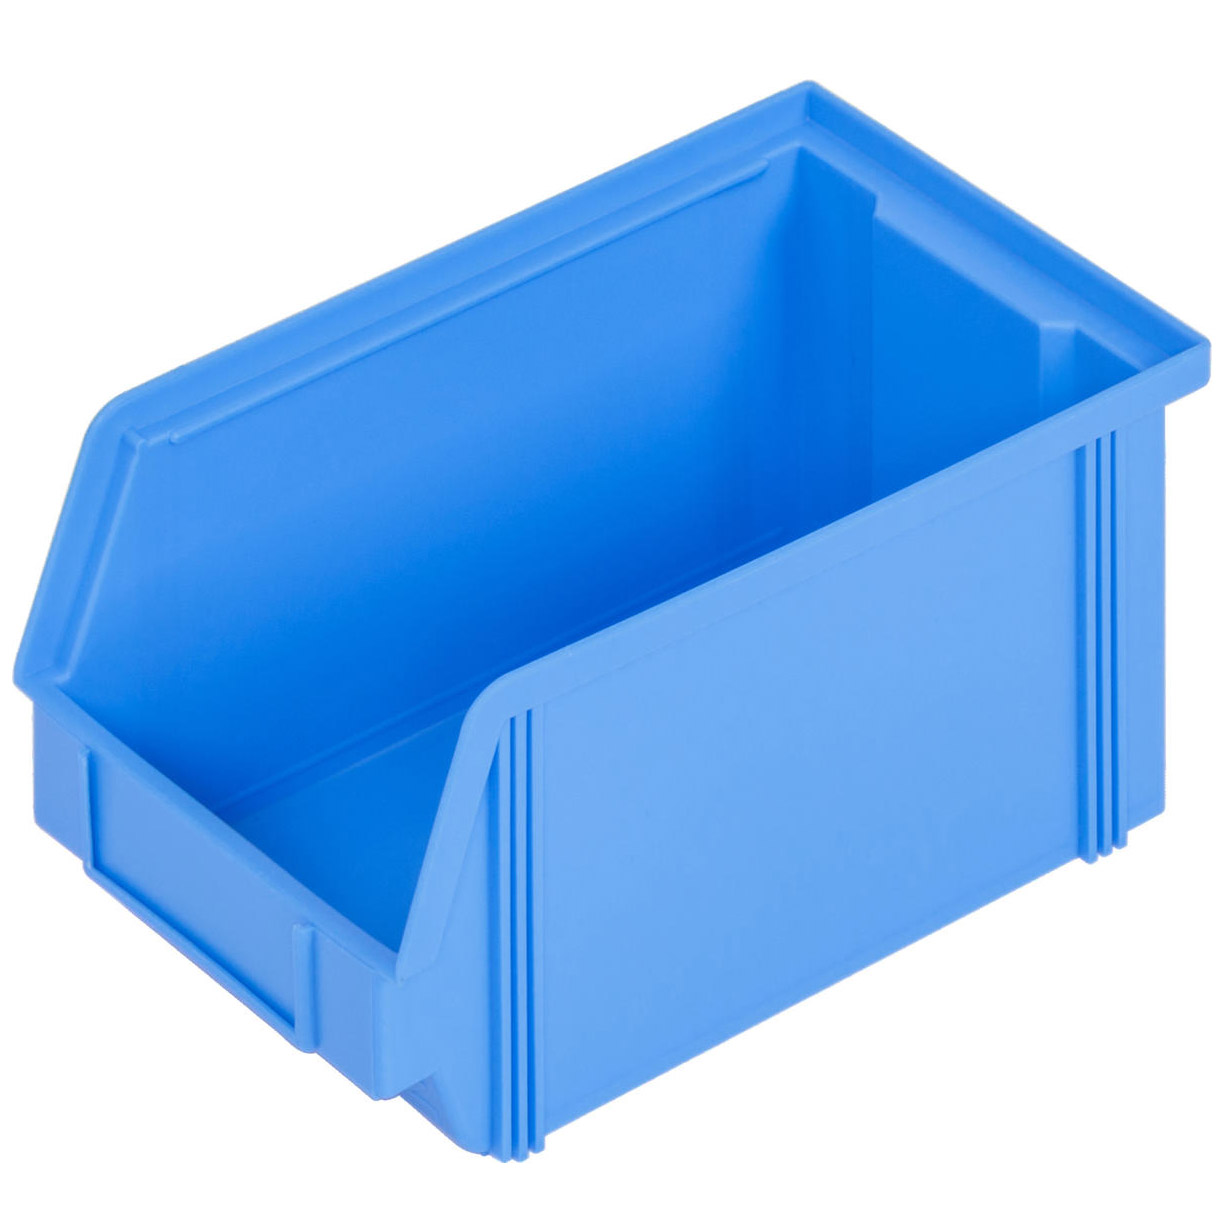 Sichtbox CLASSIC FB 4, LxBxH 230/200x140x122 mm, Gewicht 230 g, 3,7 Liter, blau